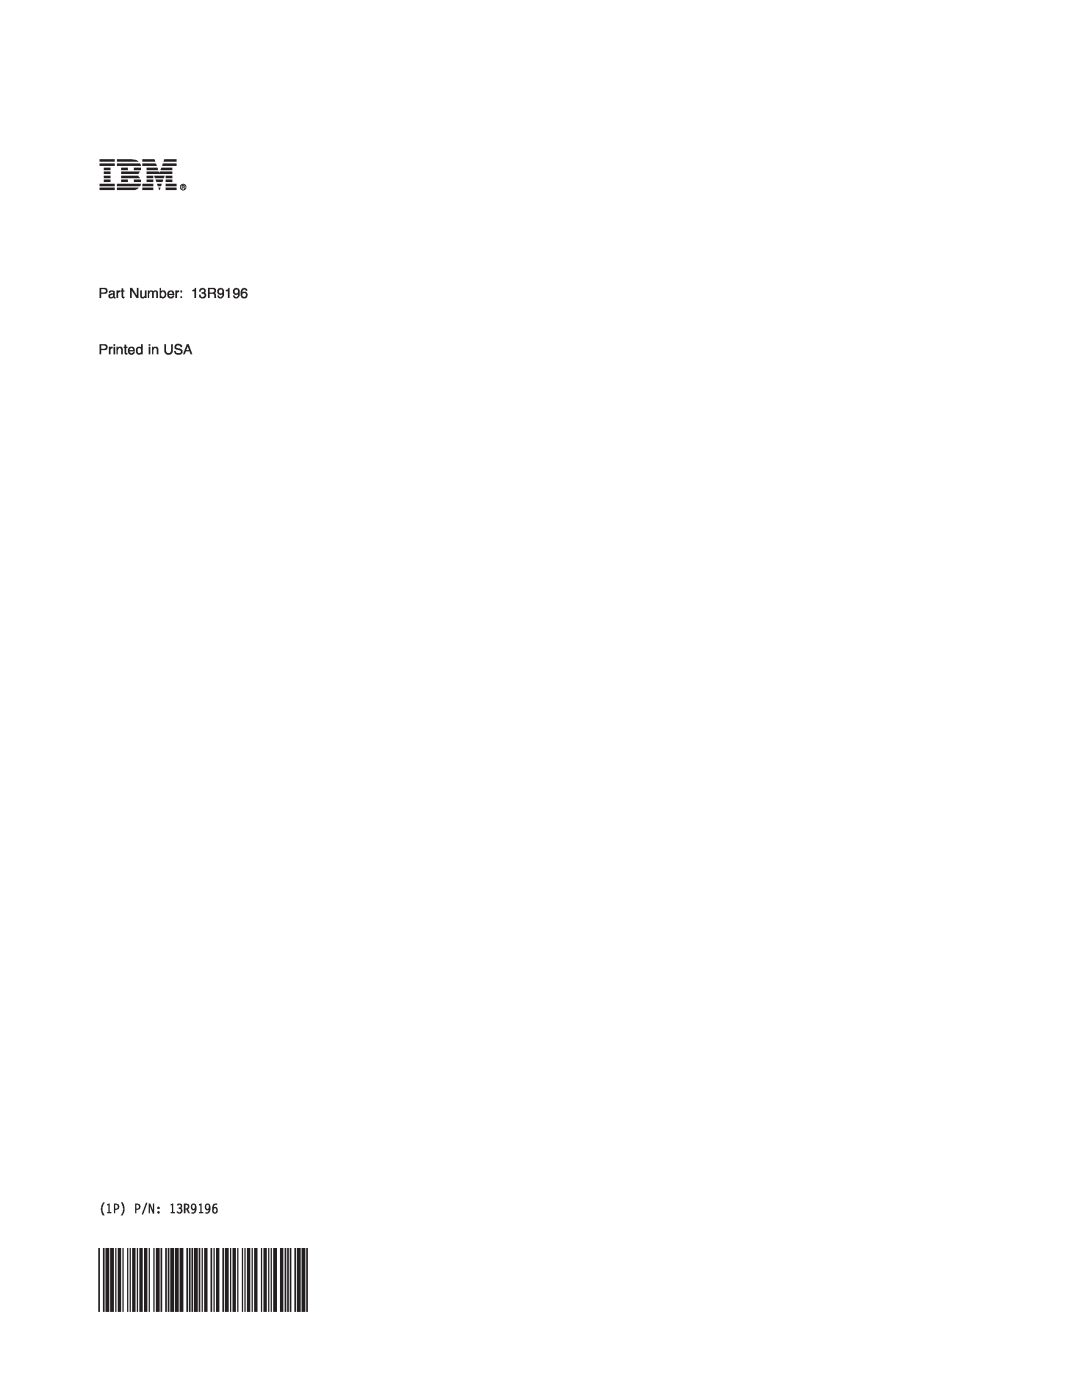 IBM 8188, 8128, 8185, 8189, 8186, 8187, 8190 manual Part Number 13R9196 Printed in USA, 1P P/N 13R9196 